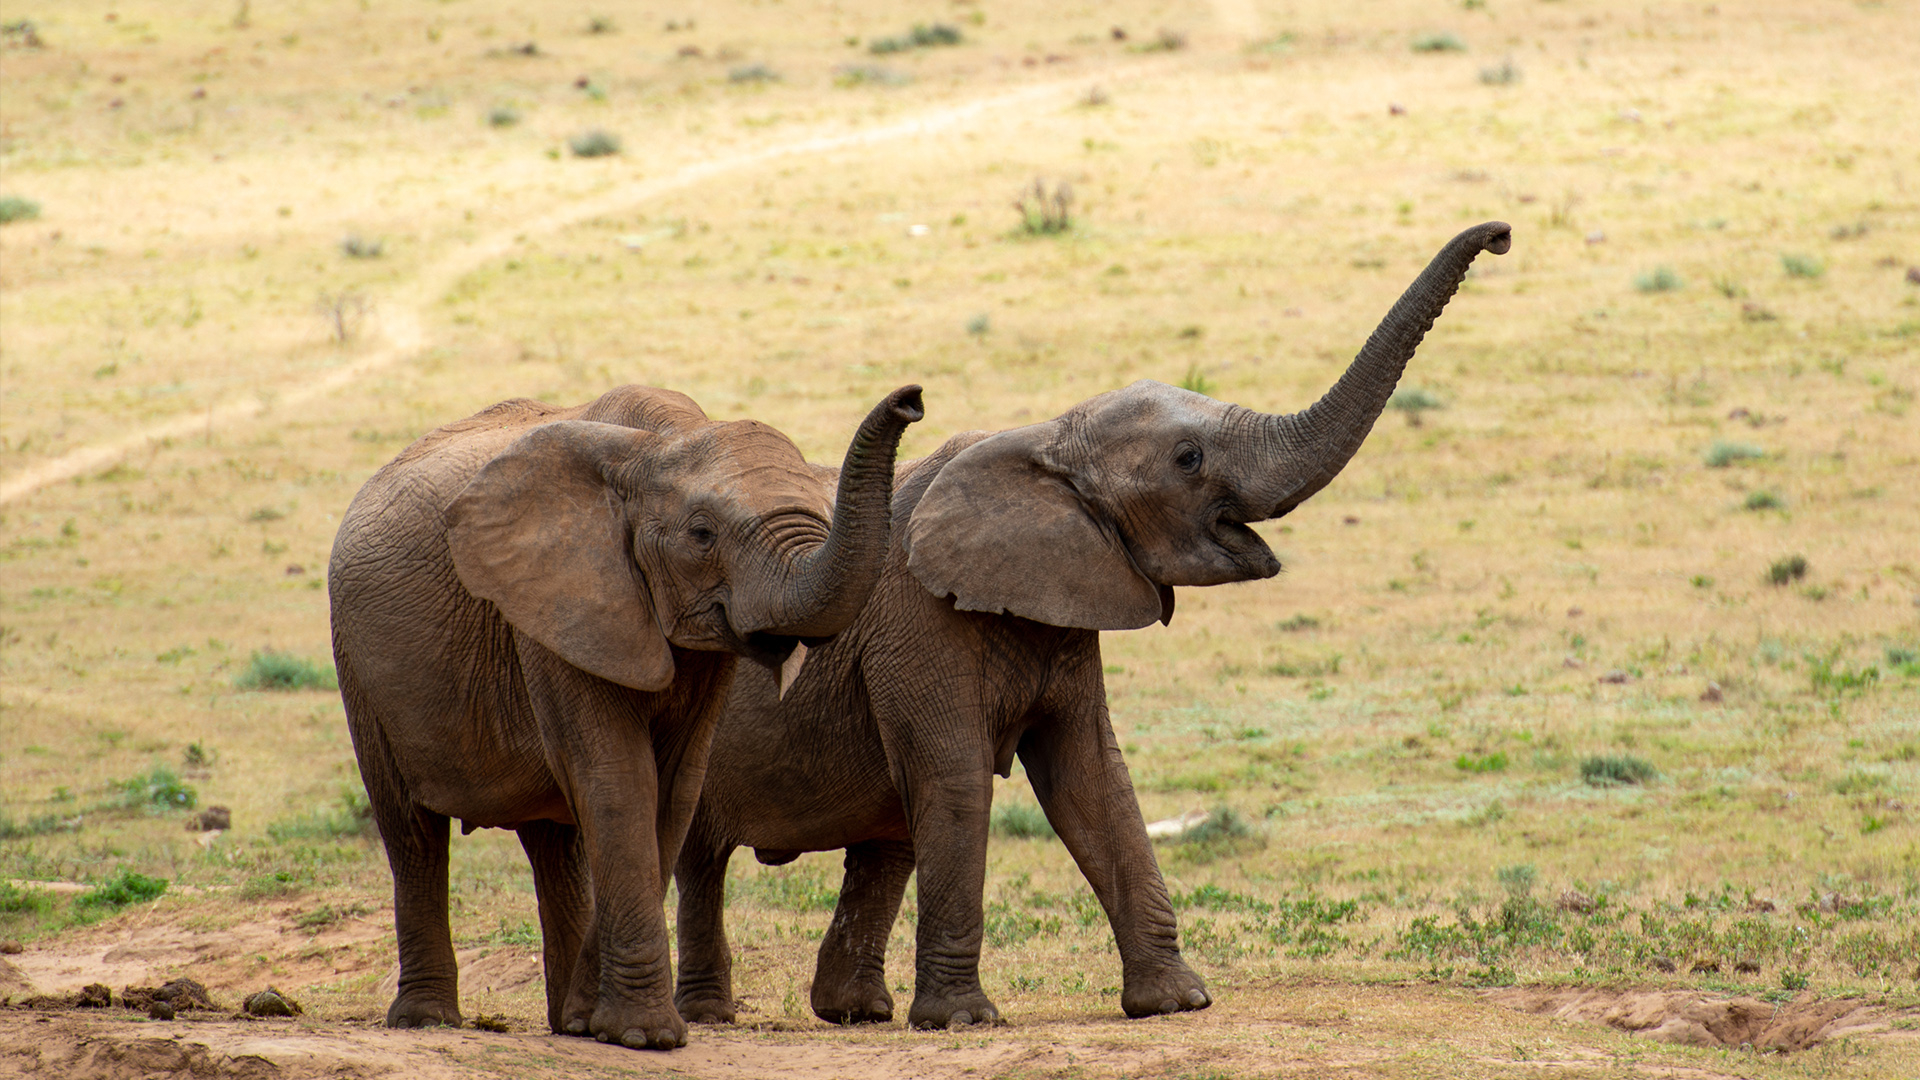 Two elephants raising their trunks